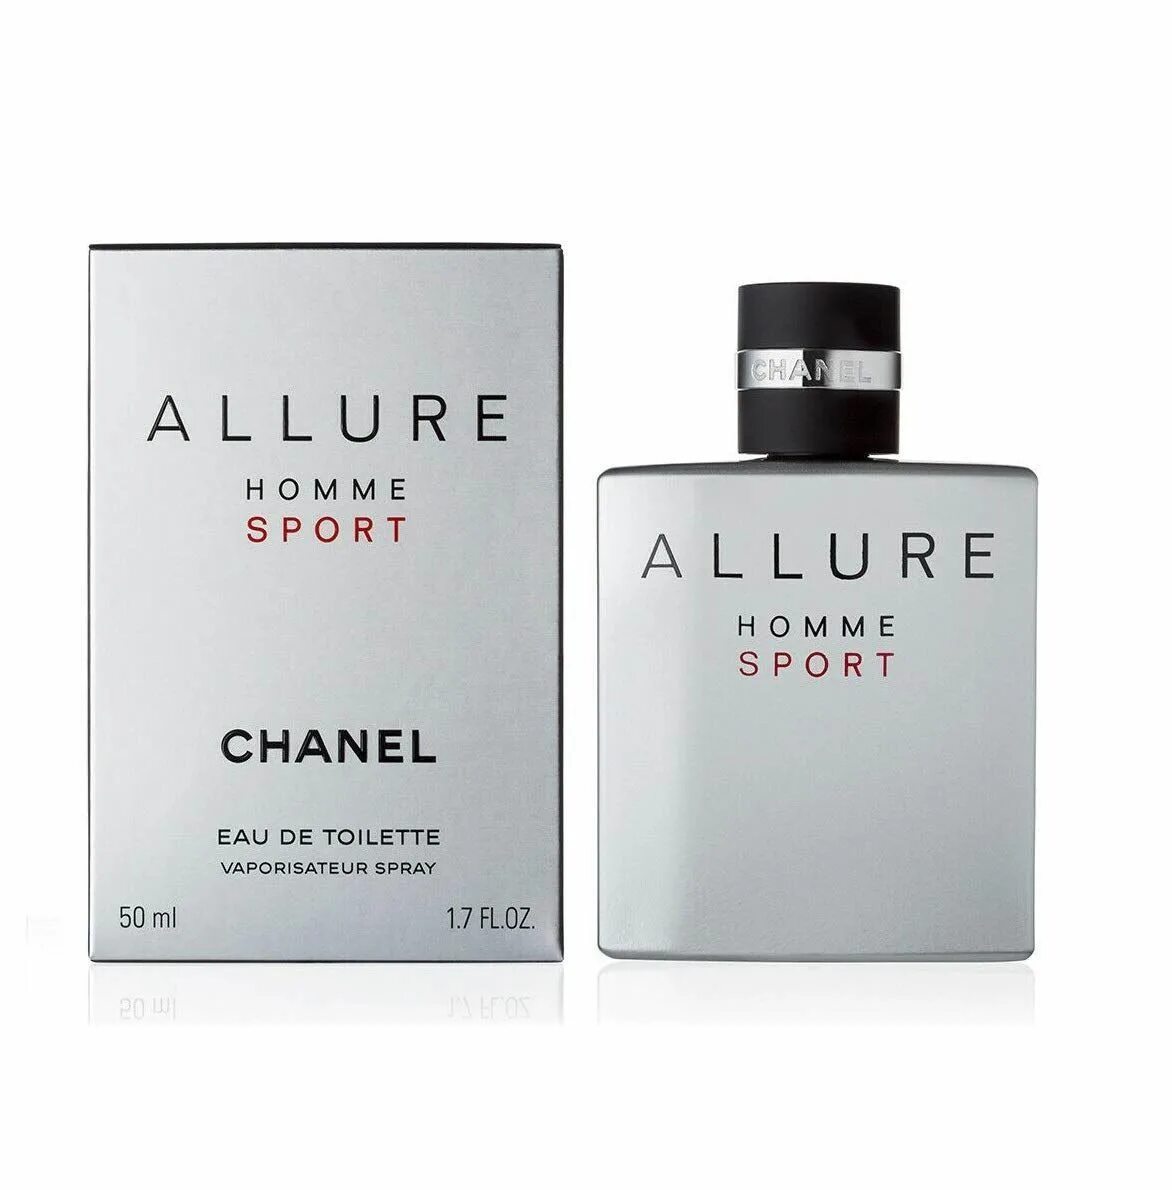 Chanel Allure homme Sport EDT 100 ml. Chanel Allure homme Sport EDT 150ml. Chanel Allure Sport 100 ml. Шанель Аллюр спорт мужские 150 мл. Allure homme sport eau